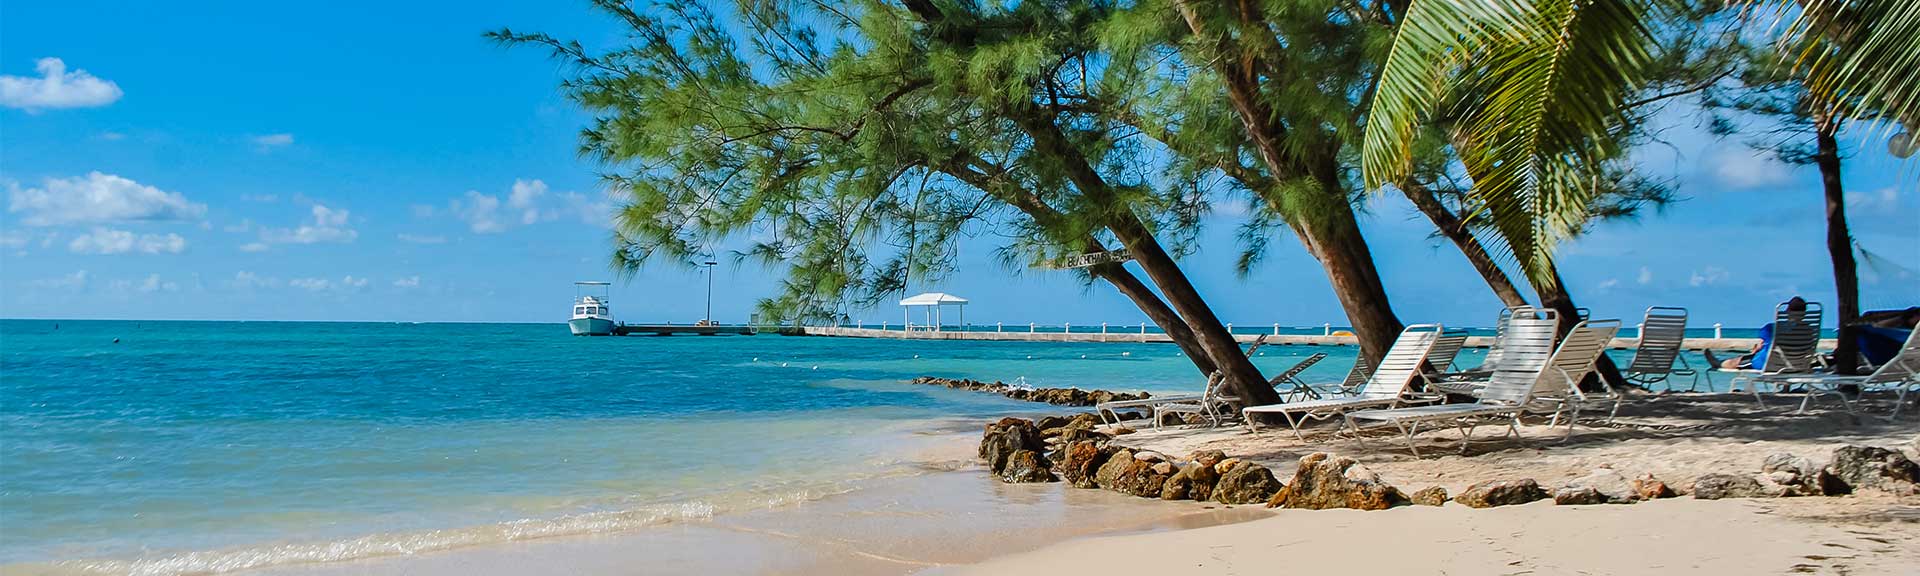 Rum Point, Grand Cayman, Cayman Islands